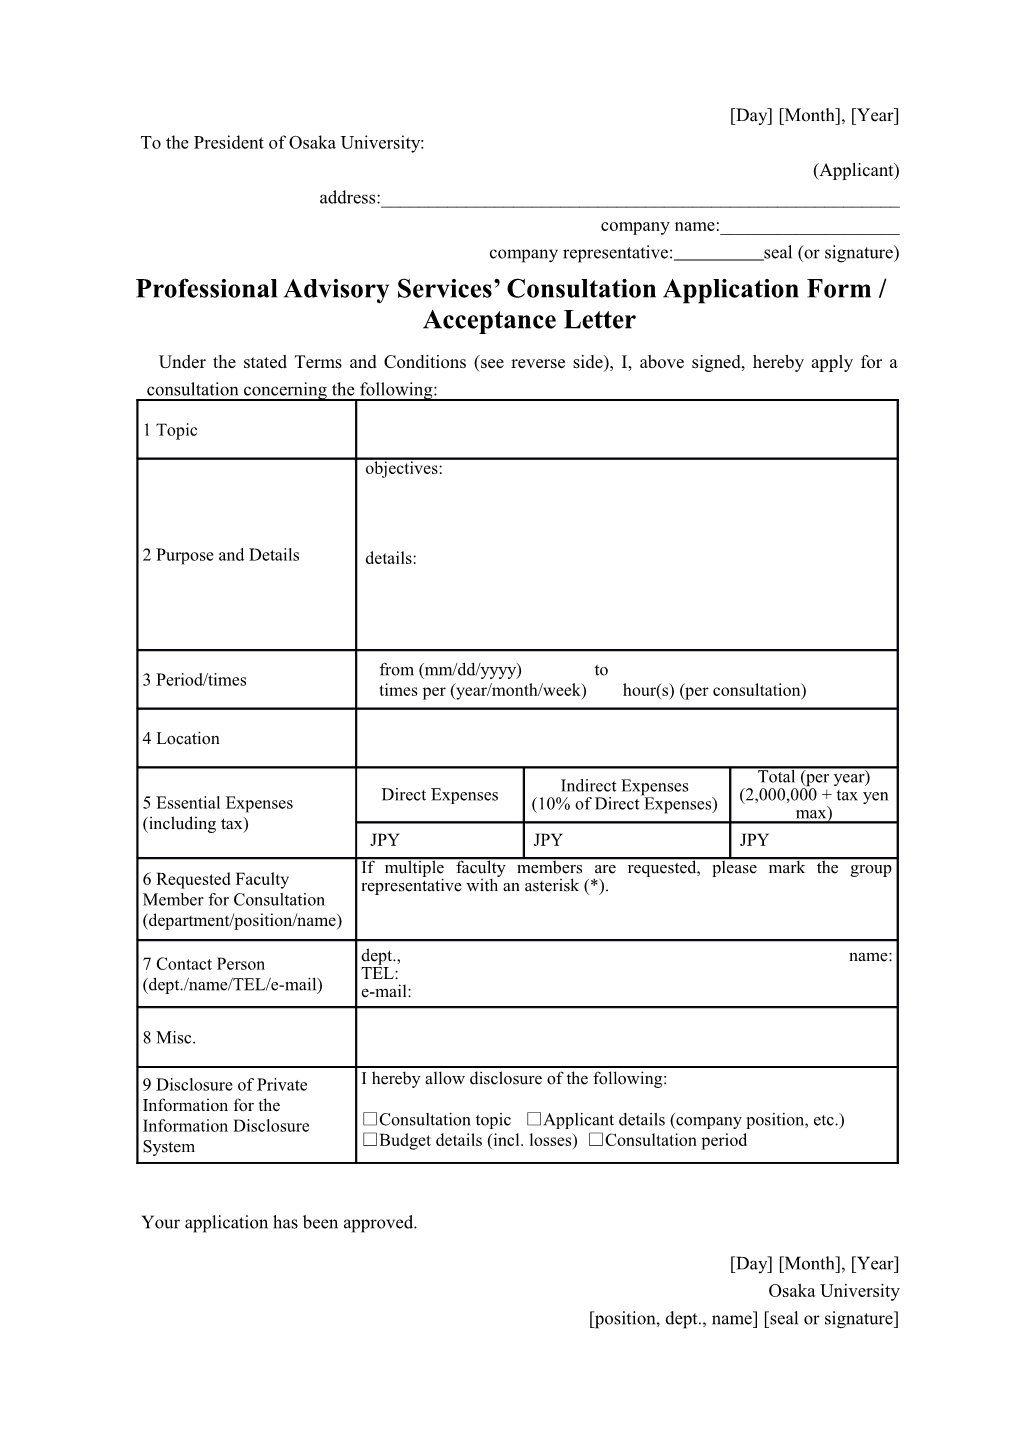 Professional Advisory Services Consultation Application Form / Acceptance Letter